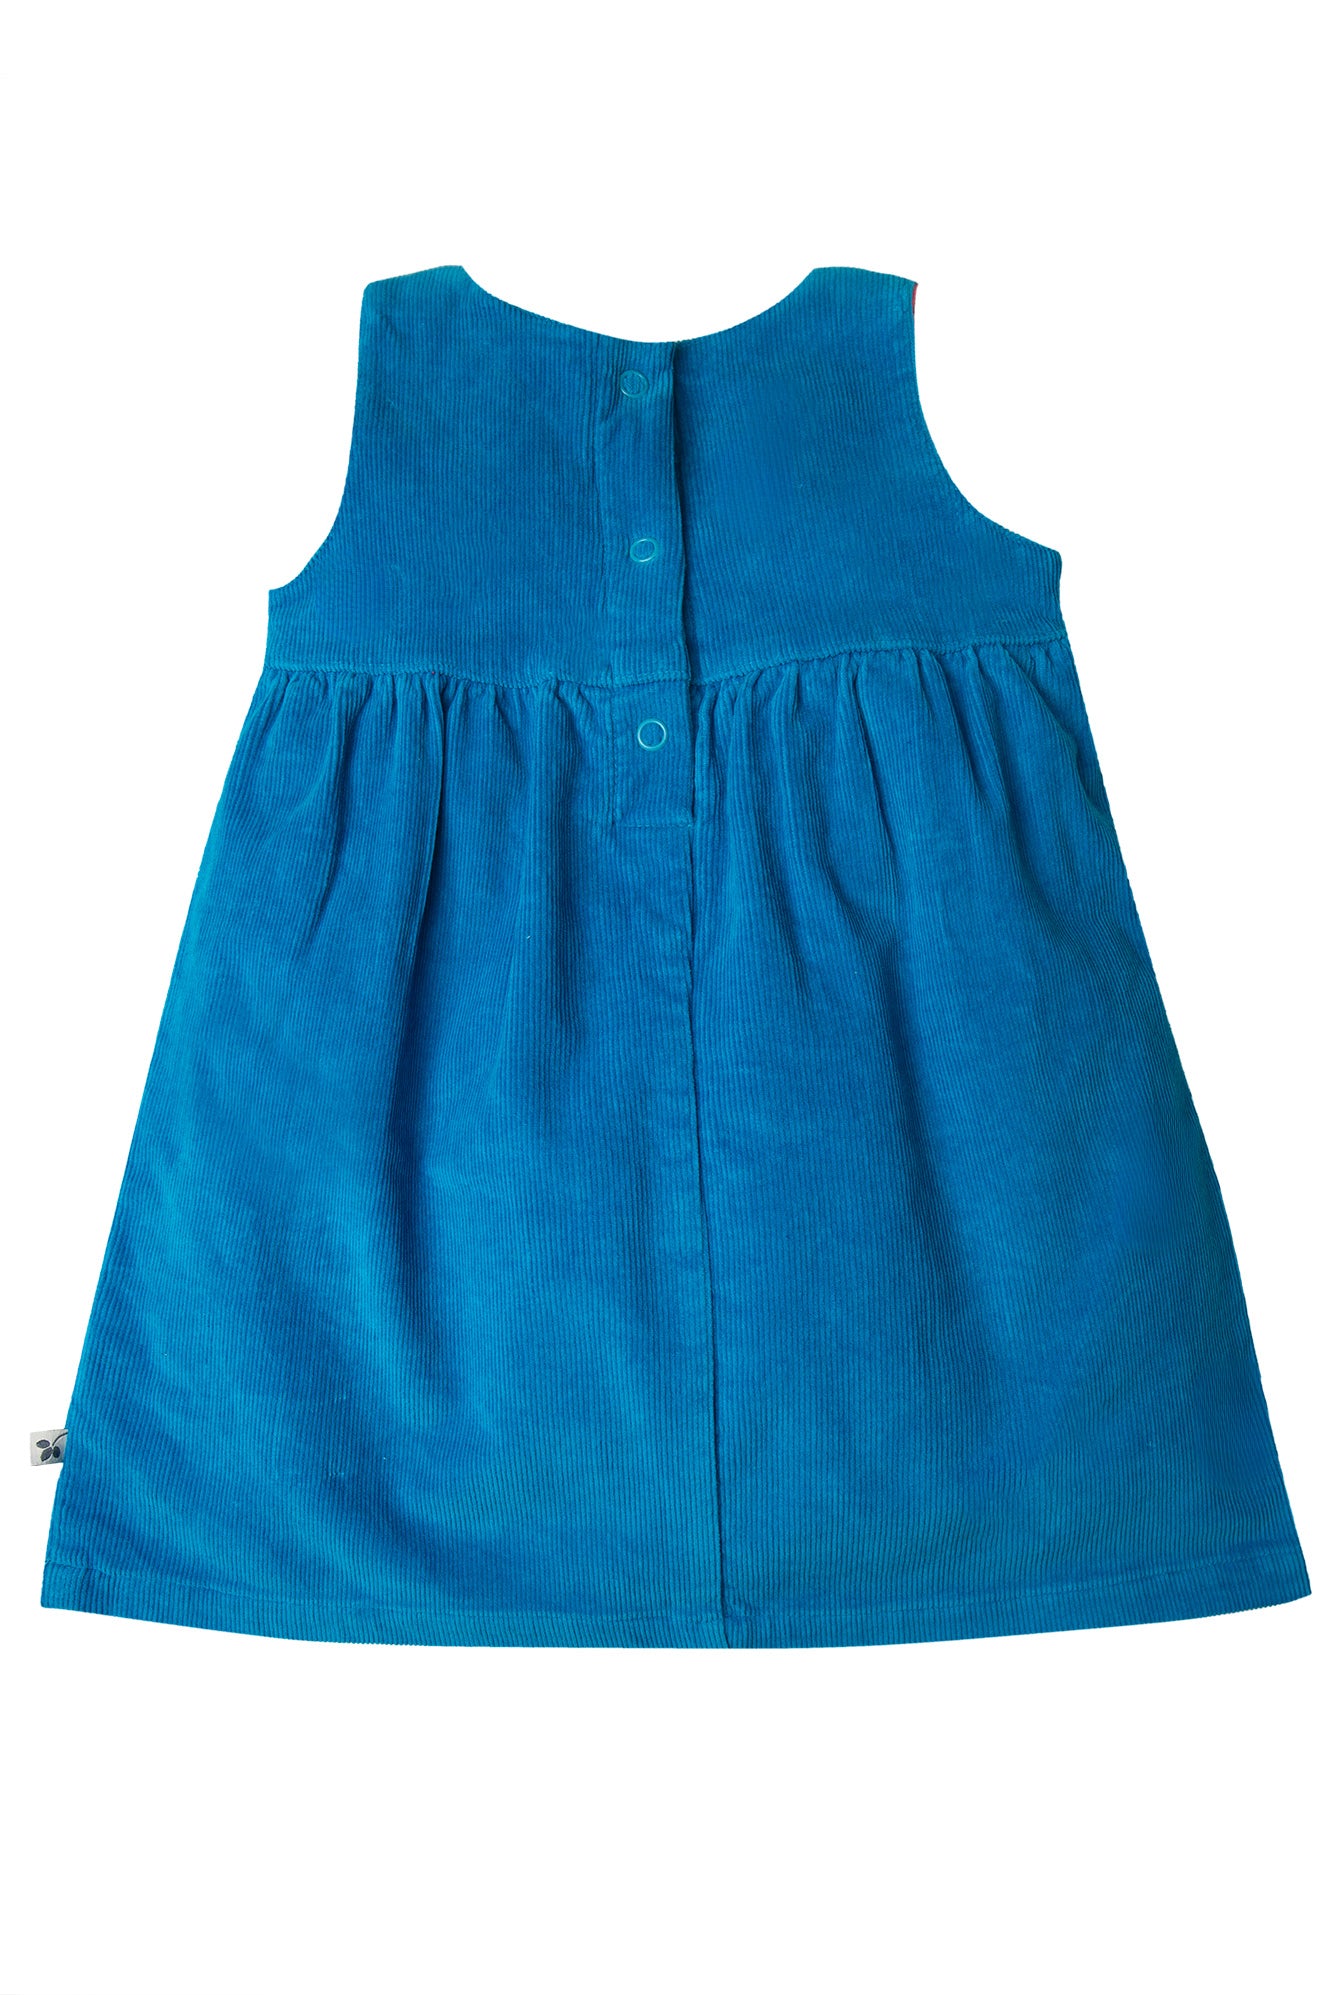 Tobermory Teal - Unicorn | Caeli Cord Dress | Sleeveless Dress | GOTS Organic Cotton